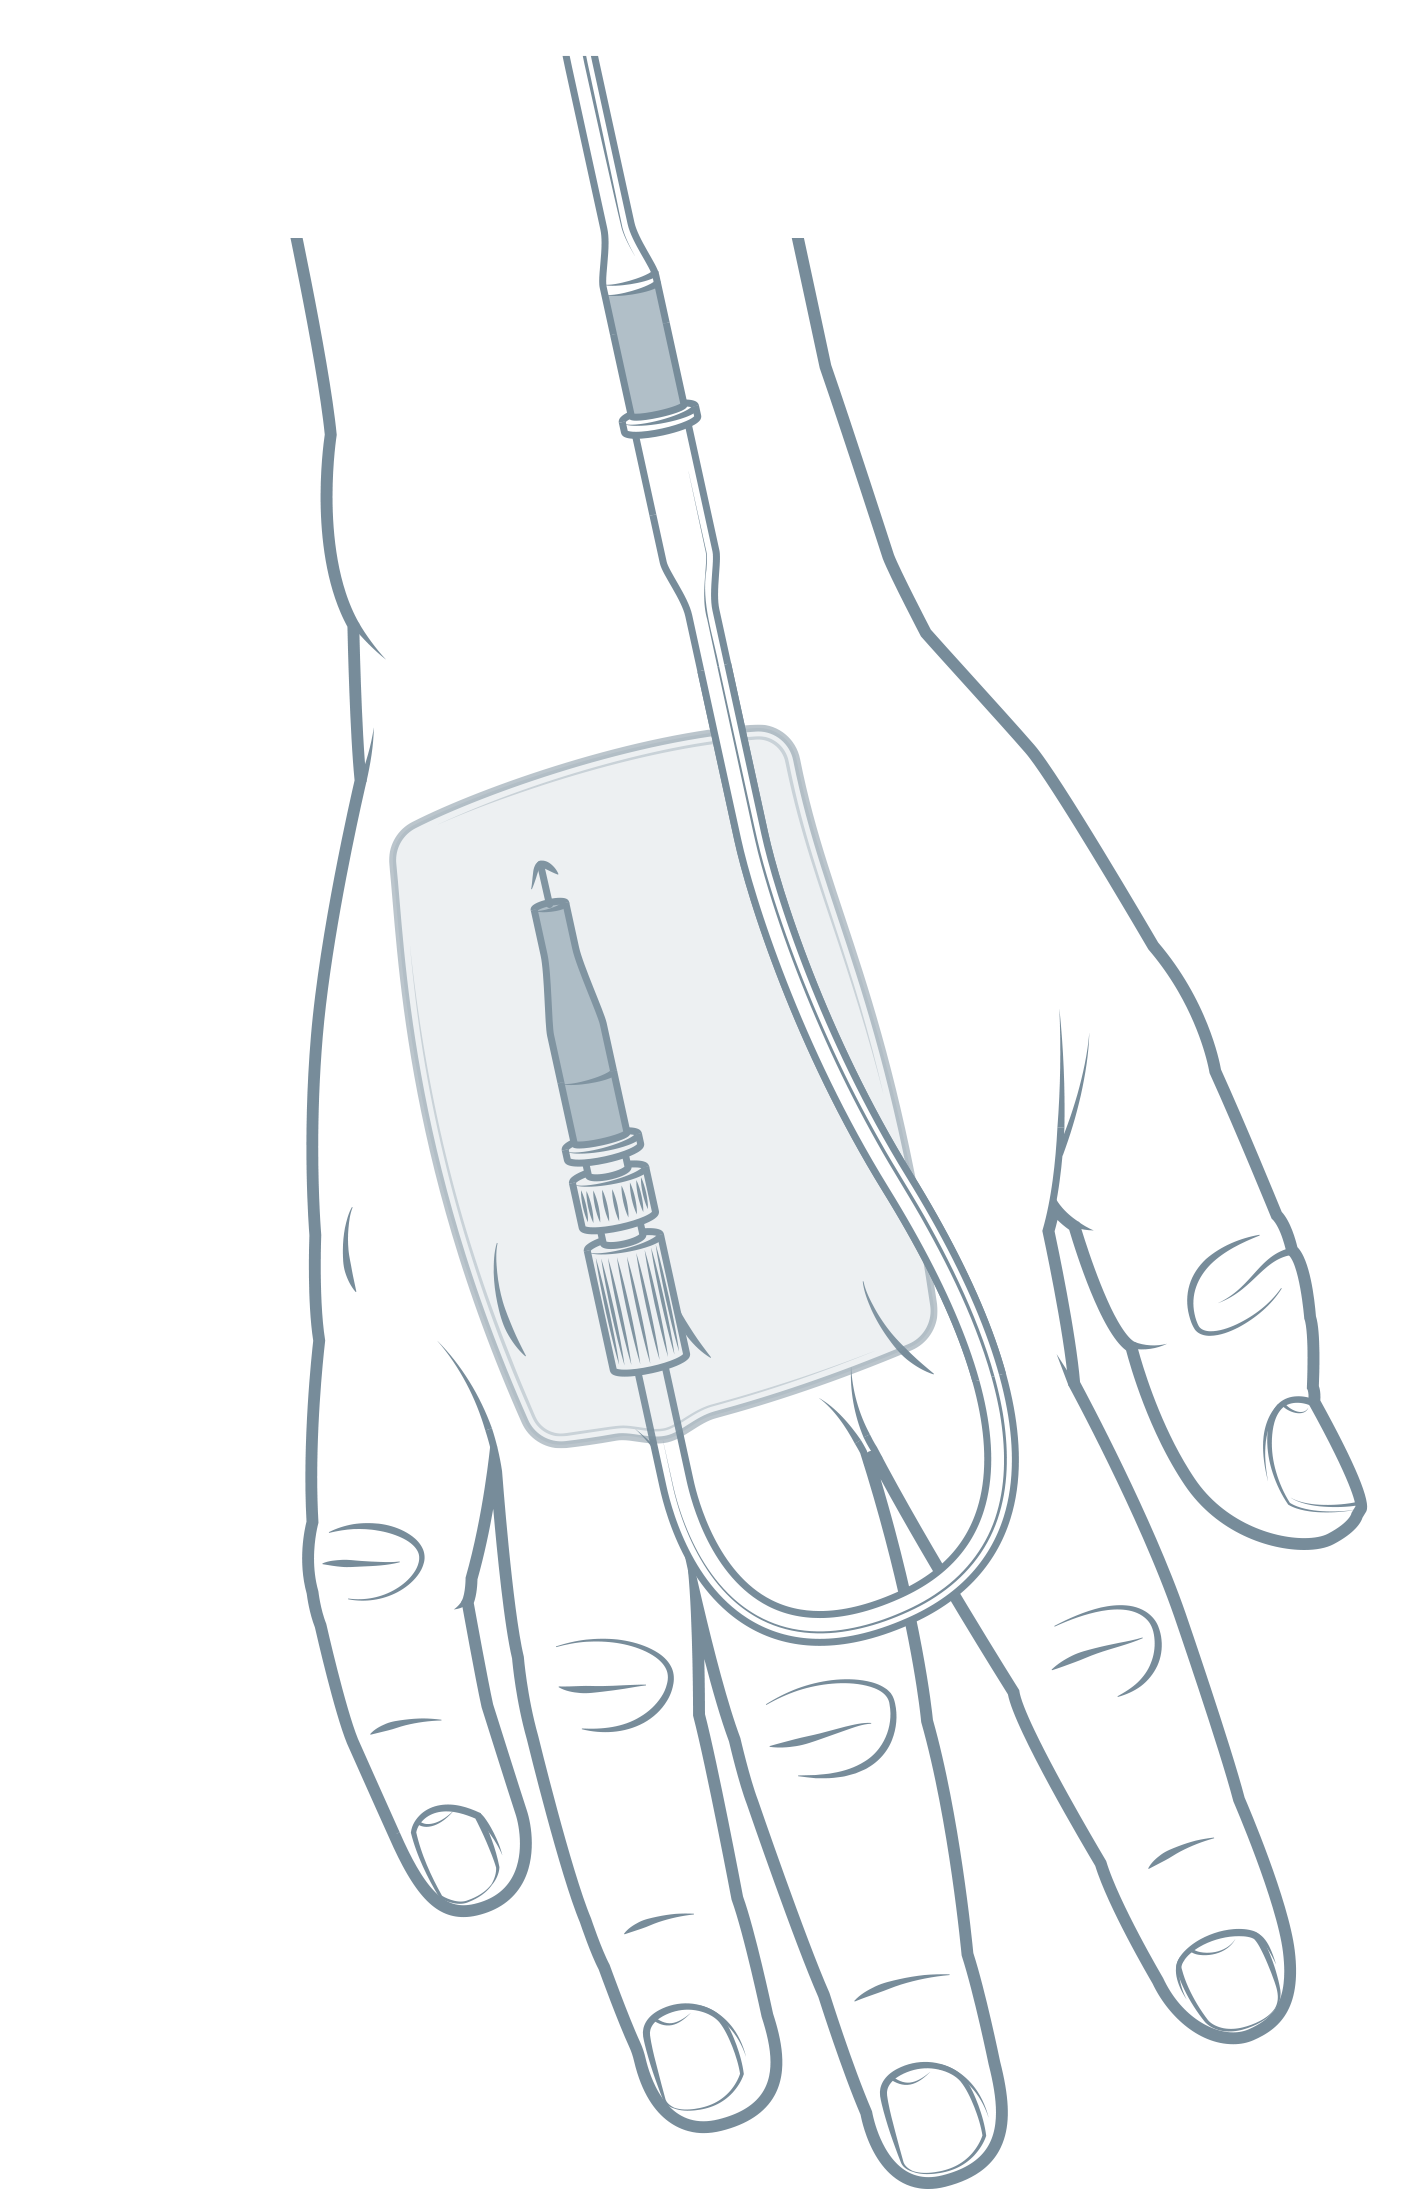 Nursing guidelines : Peripheral intravenous (IV) device management